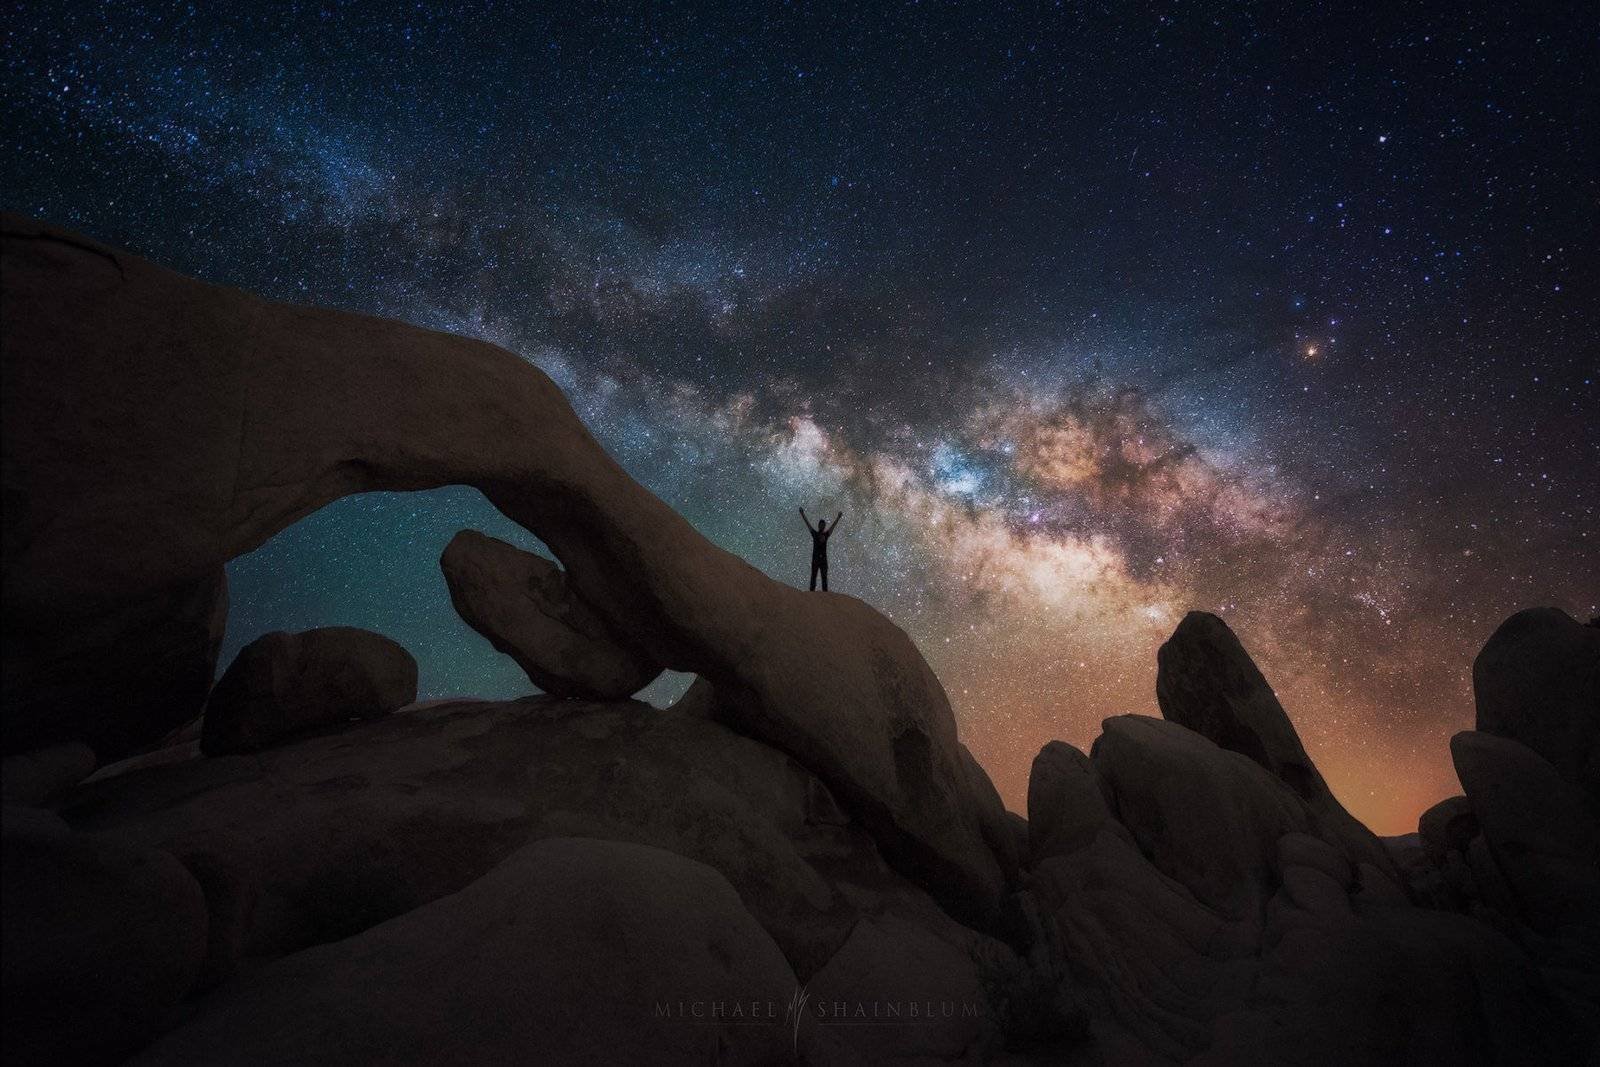 Milky Way Arch at Joshua Tree California. Michael Shainblum Photography